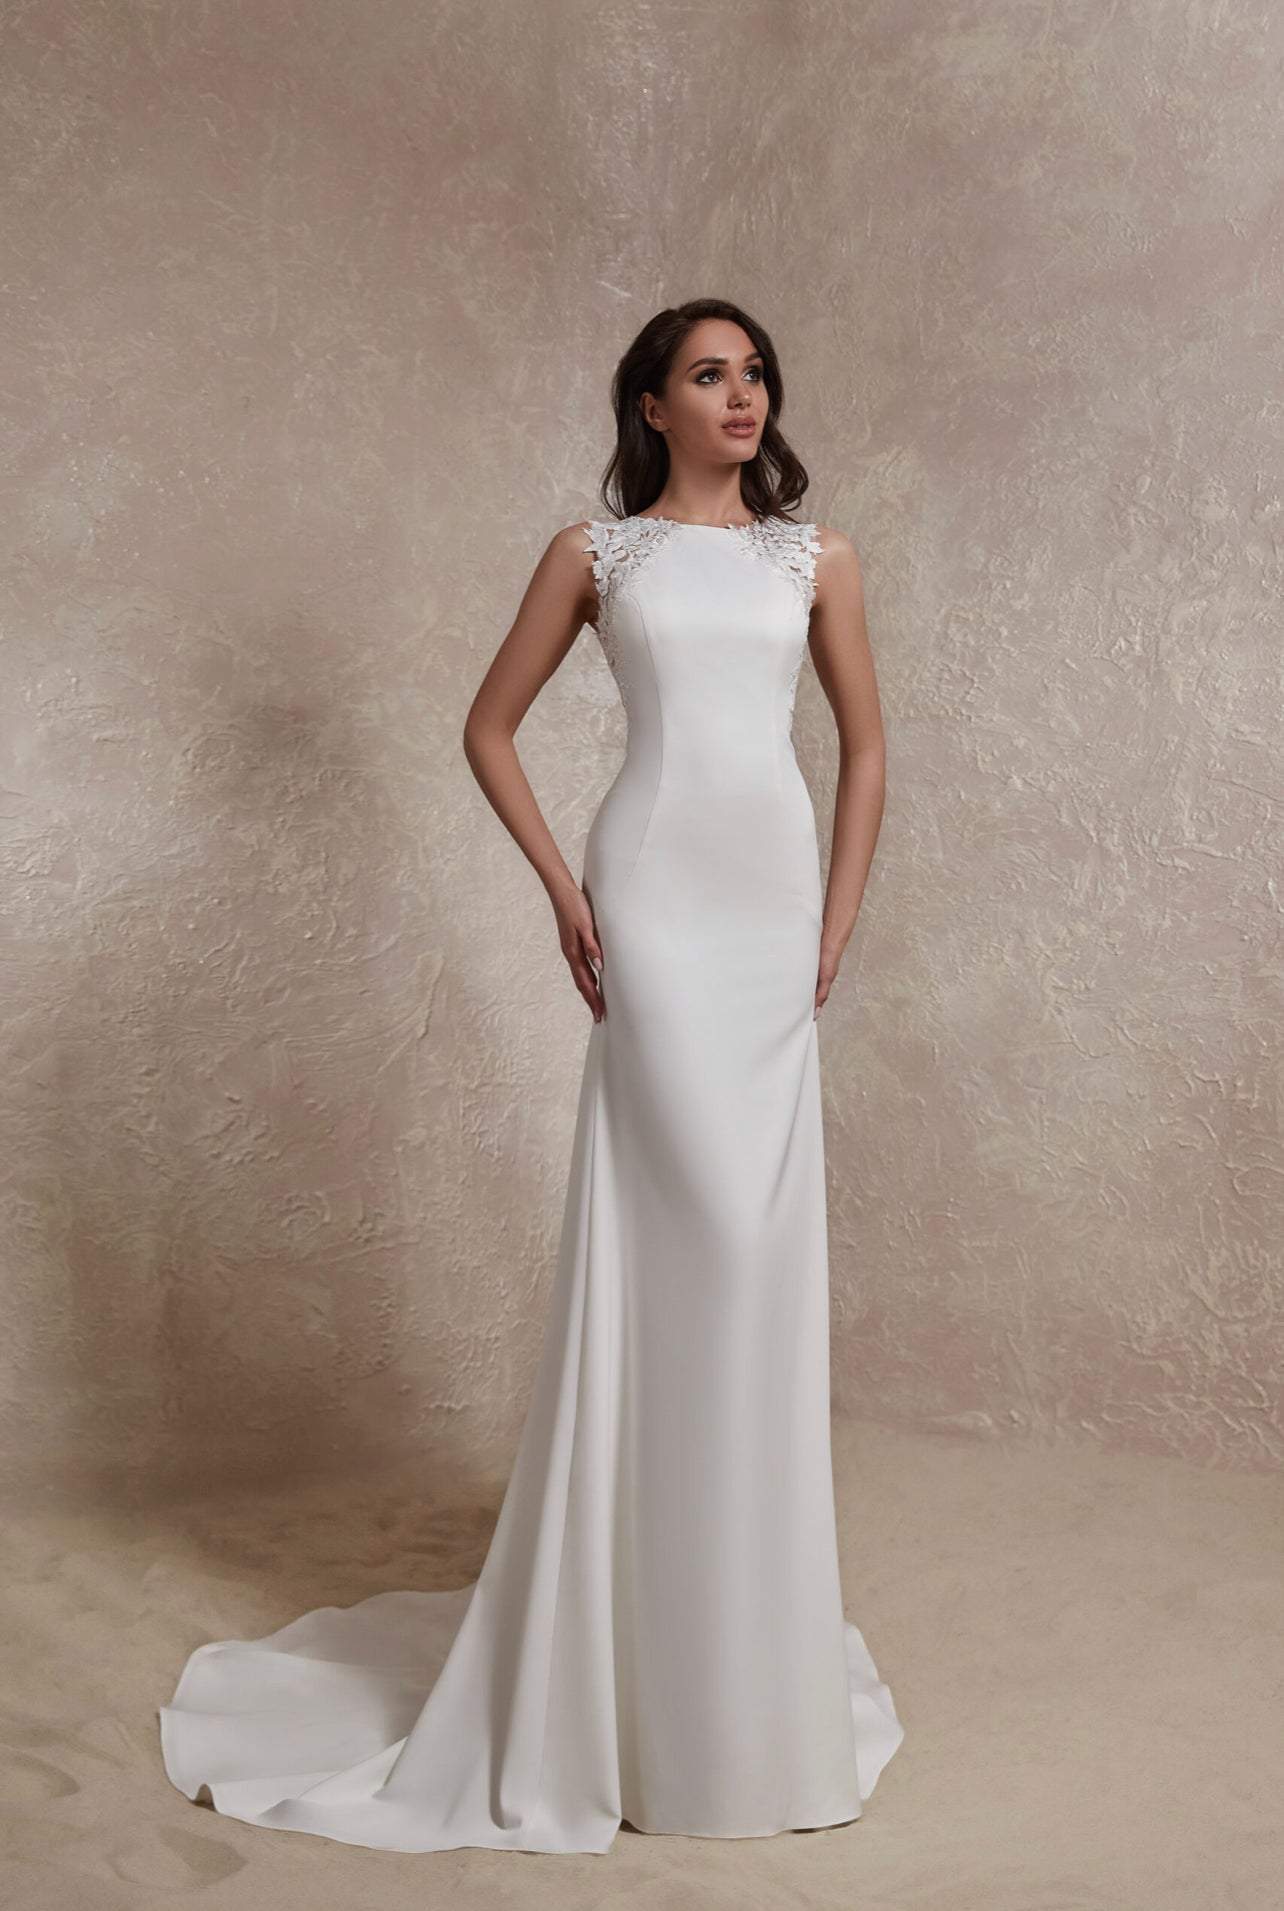 Dead White Wedding Dress-danddclothing-Classic Elegant Gowns,Mermaid,Royal Wedding Dresses,White